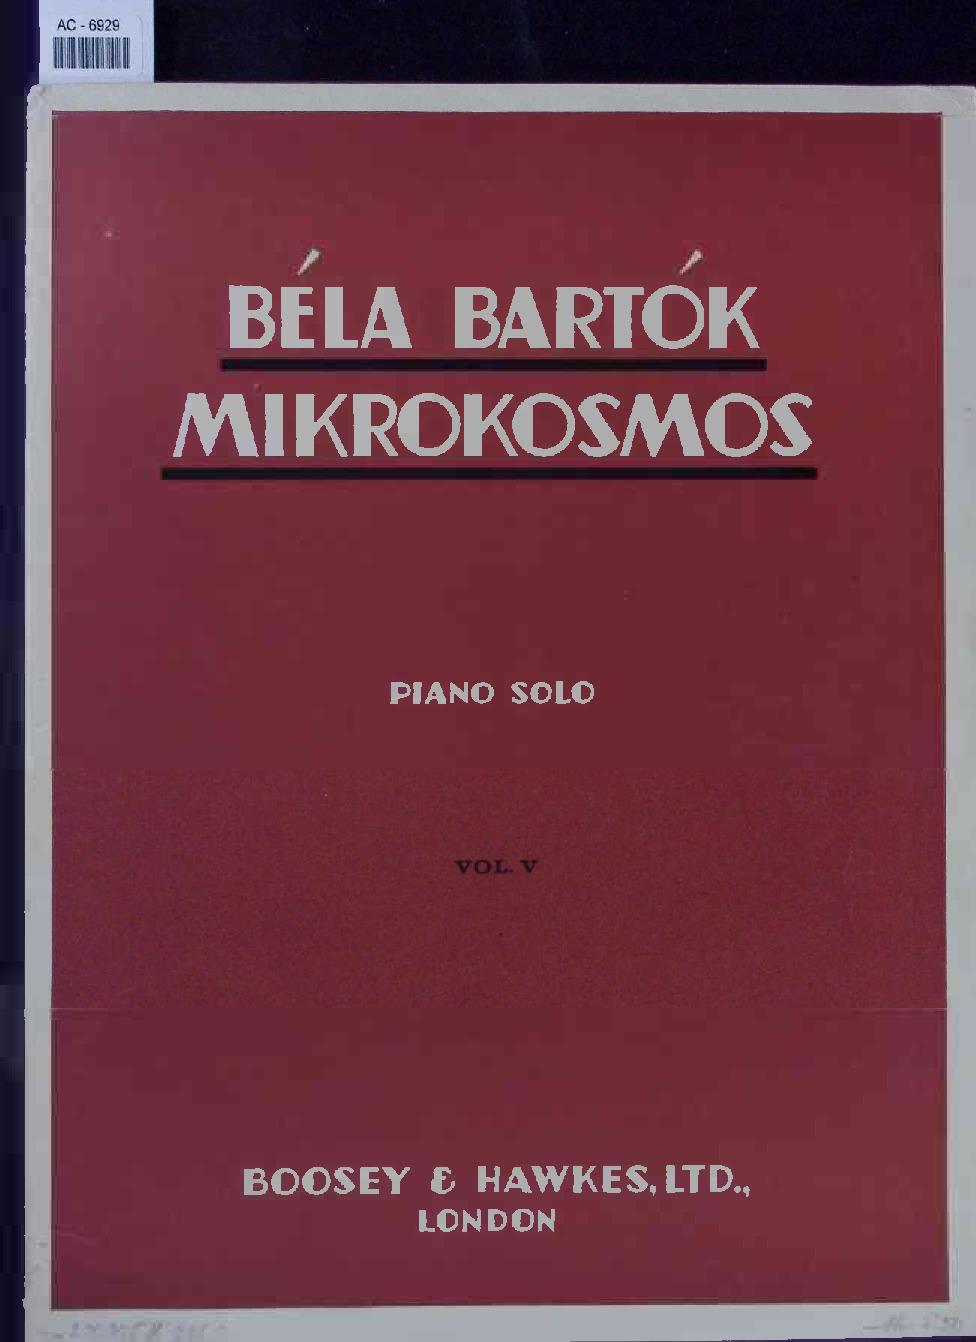 Bela Bartok. Mikrokosmos. Progressive piano pieces. Vol. 5, piano solo - Bartok, Bela